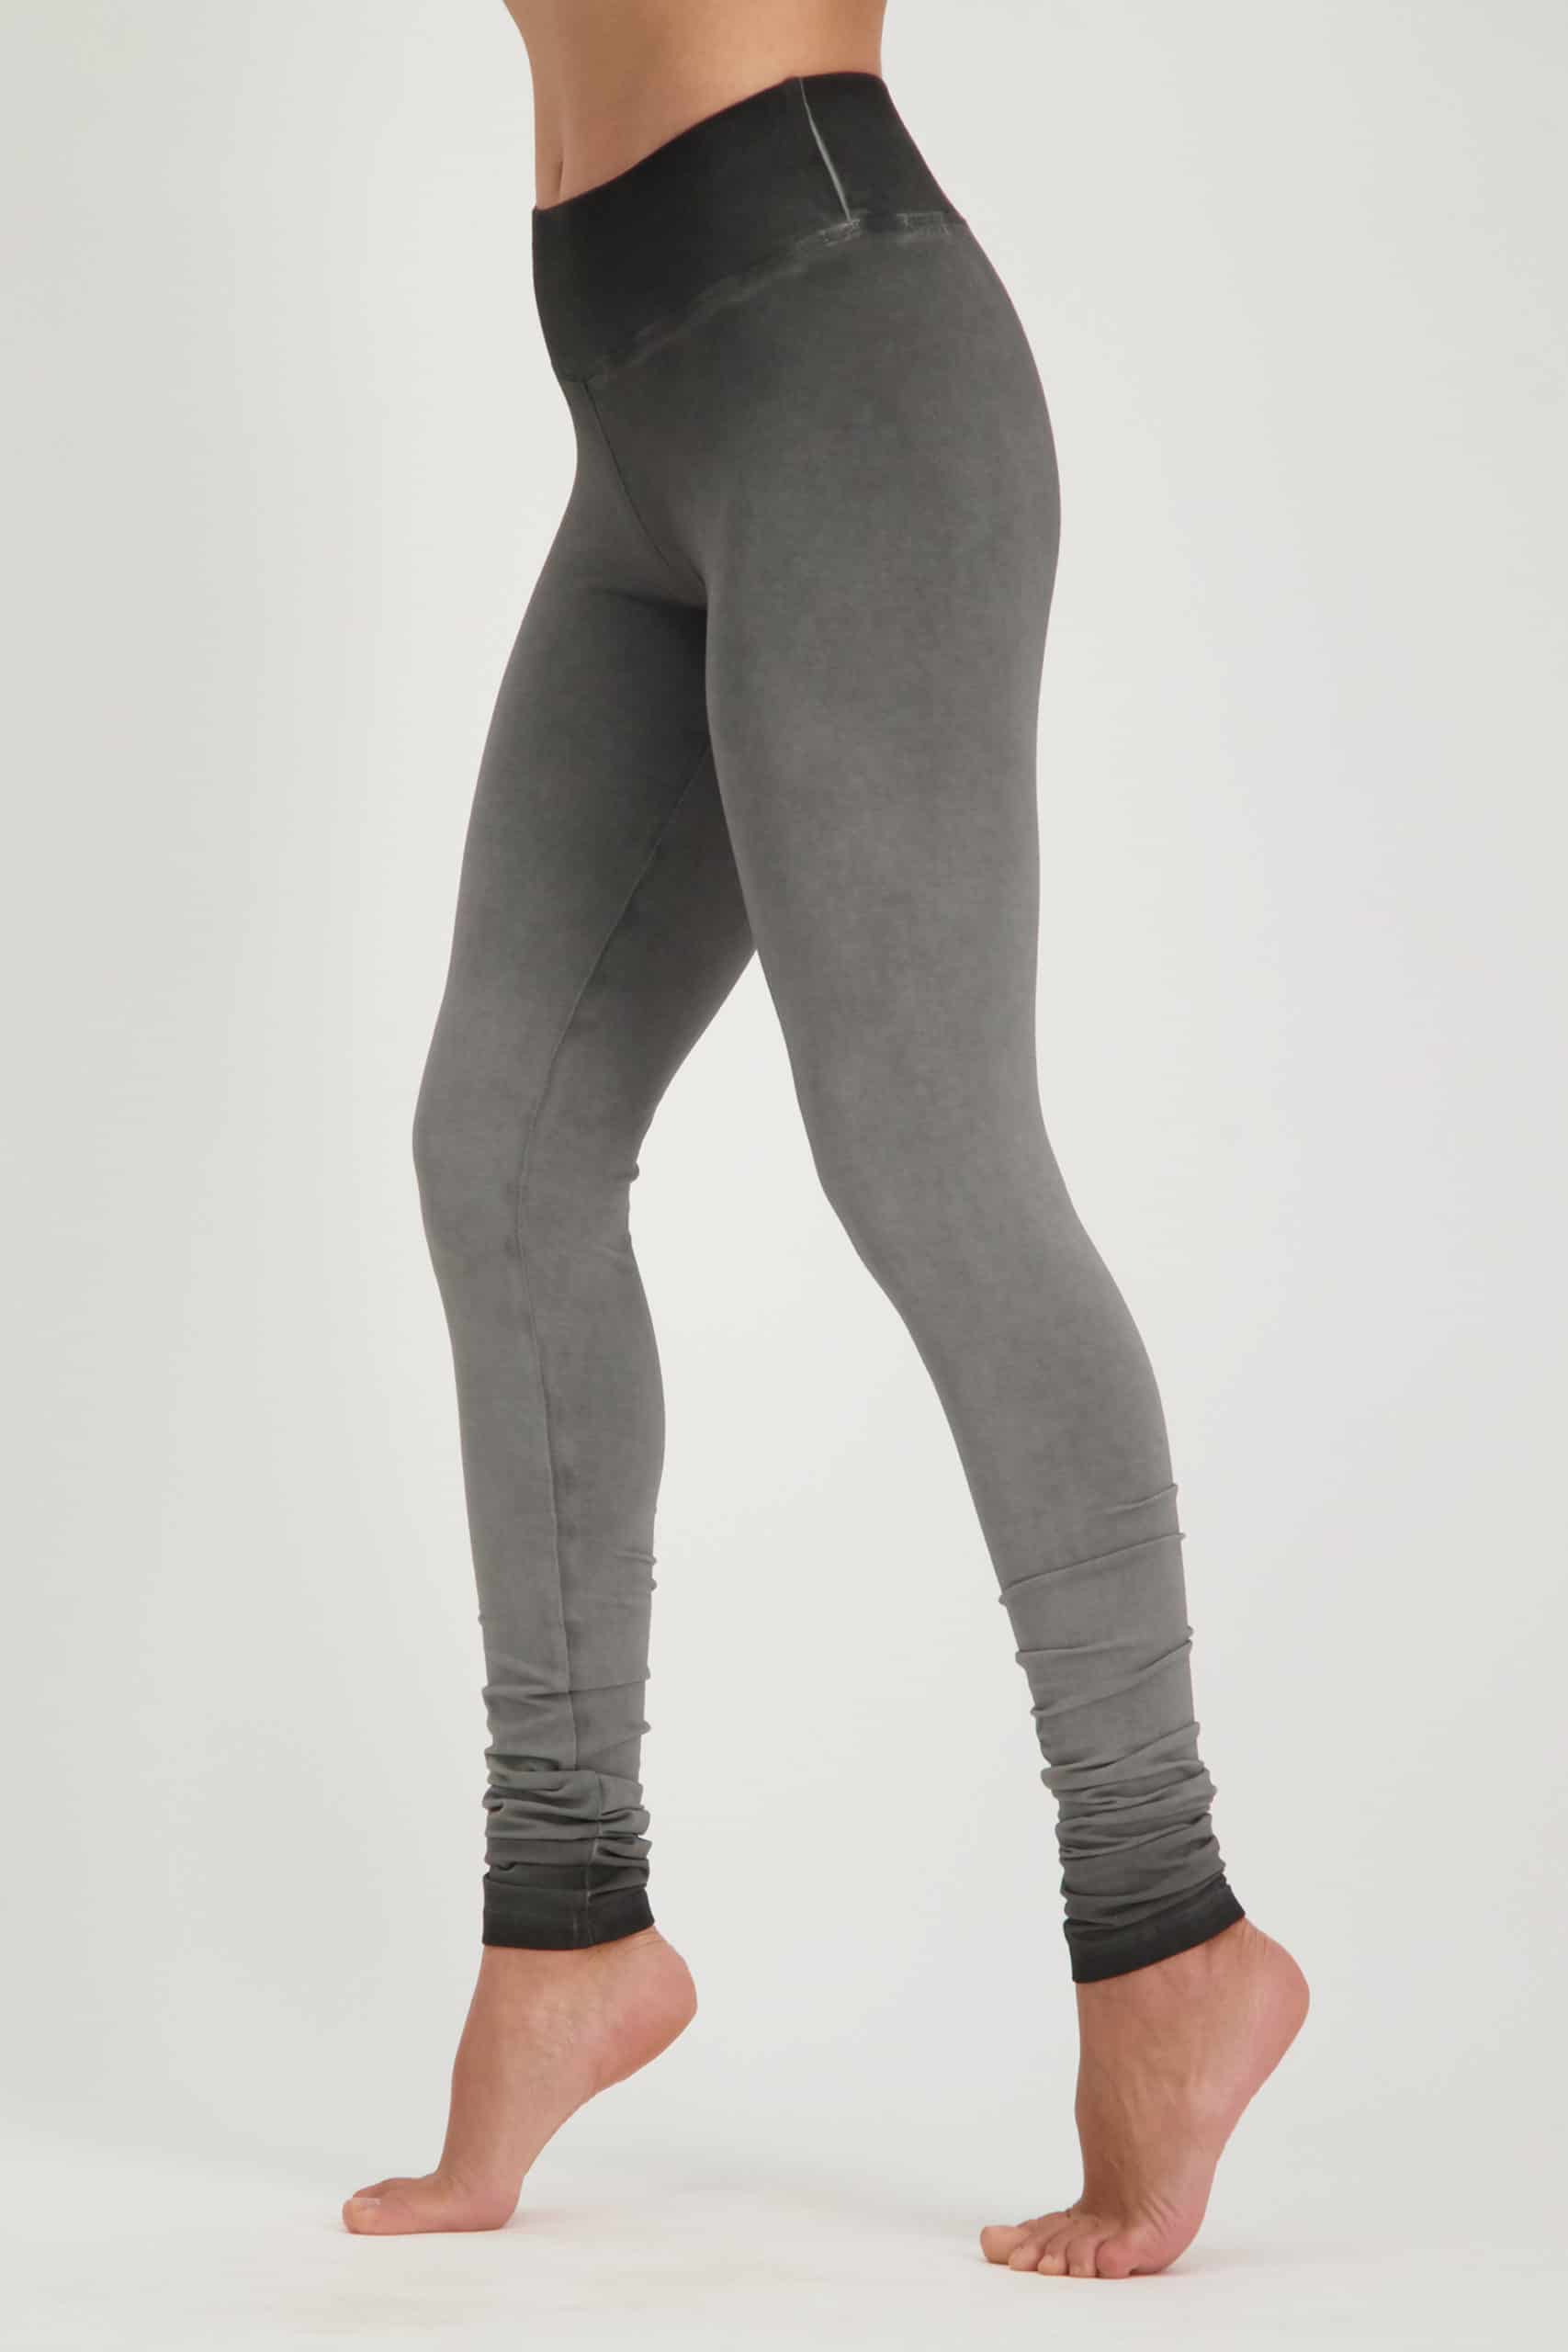 Super Soft Yoga Leggings - Urban Grey, Women's Leggings